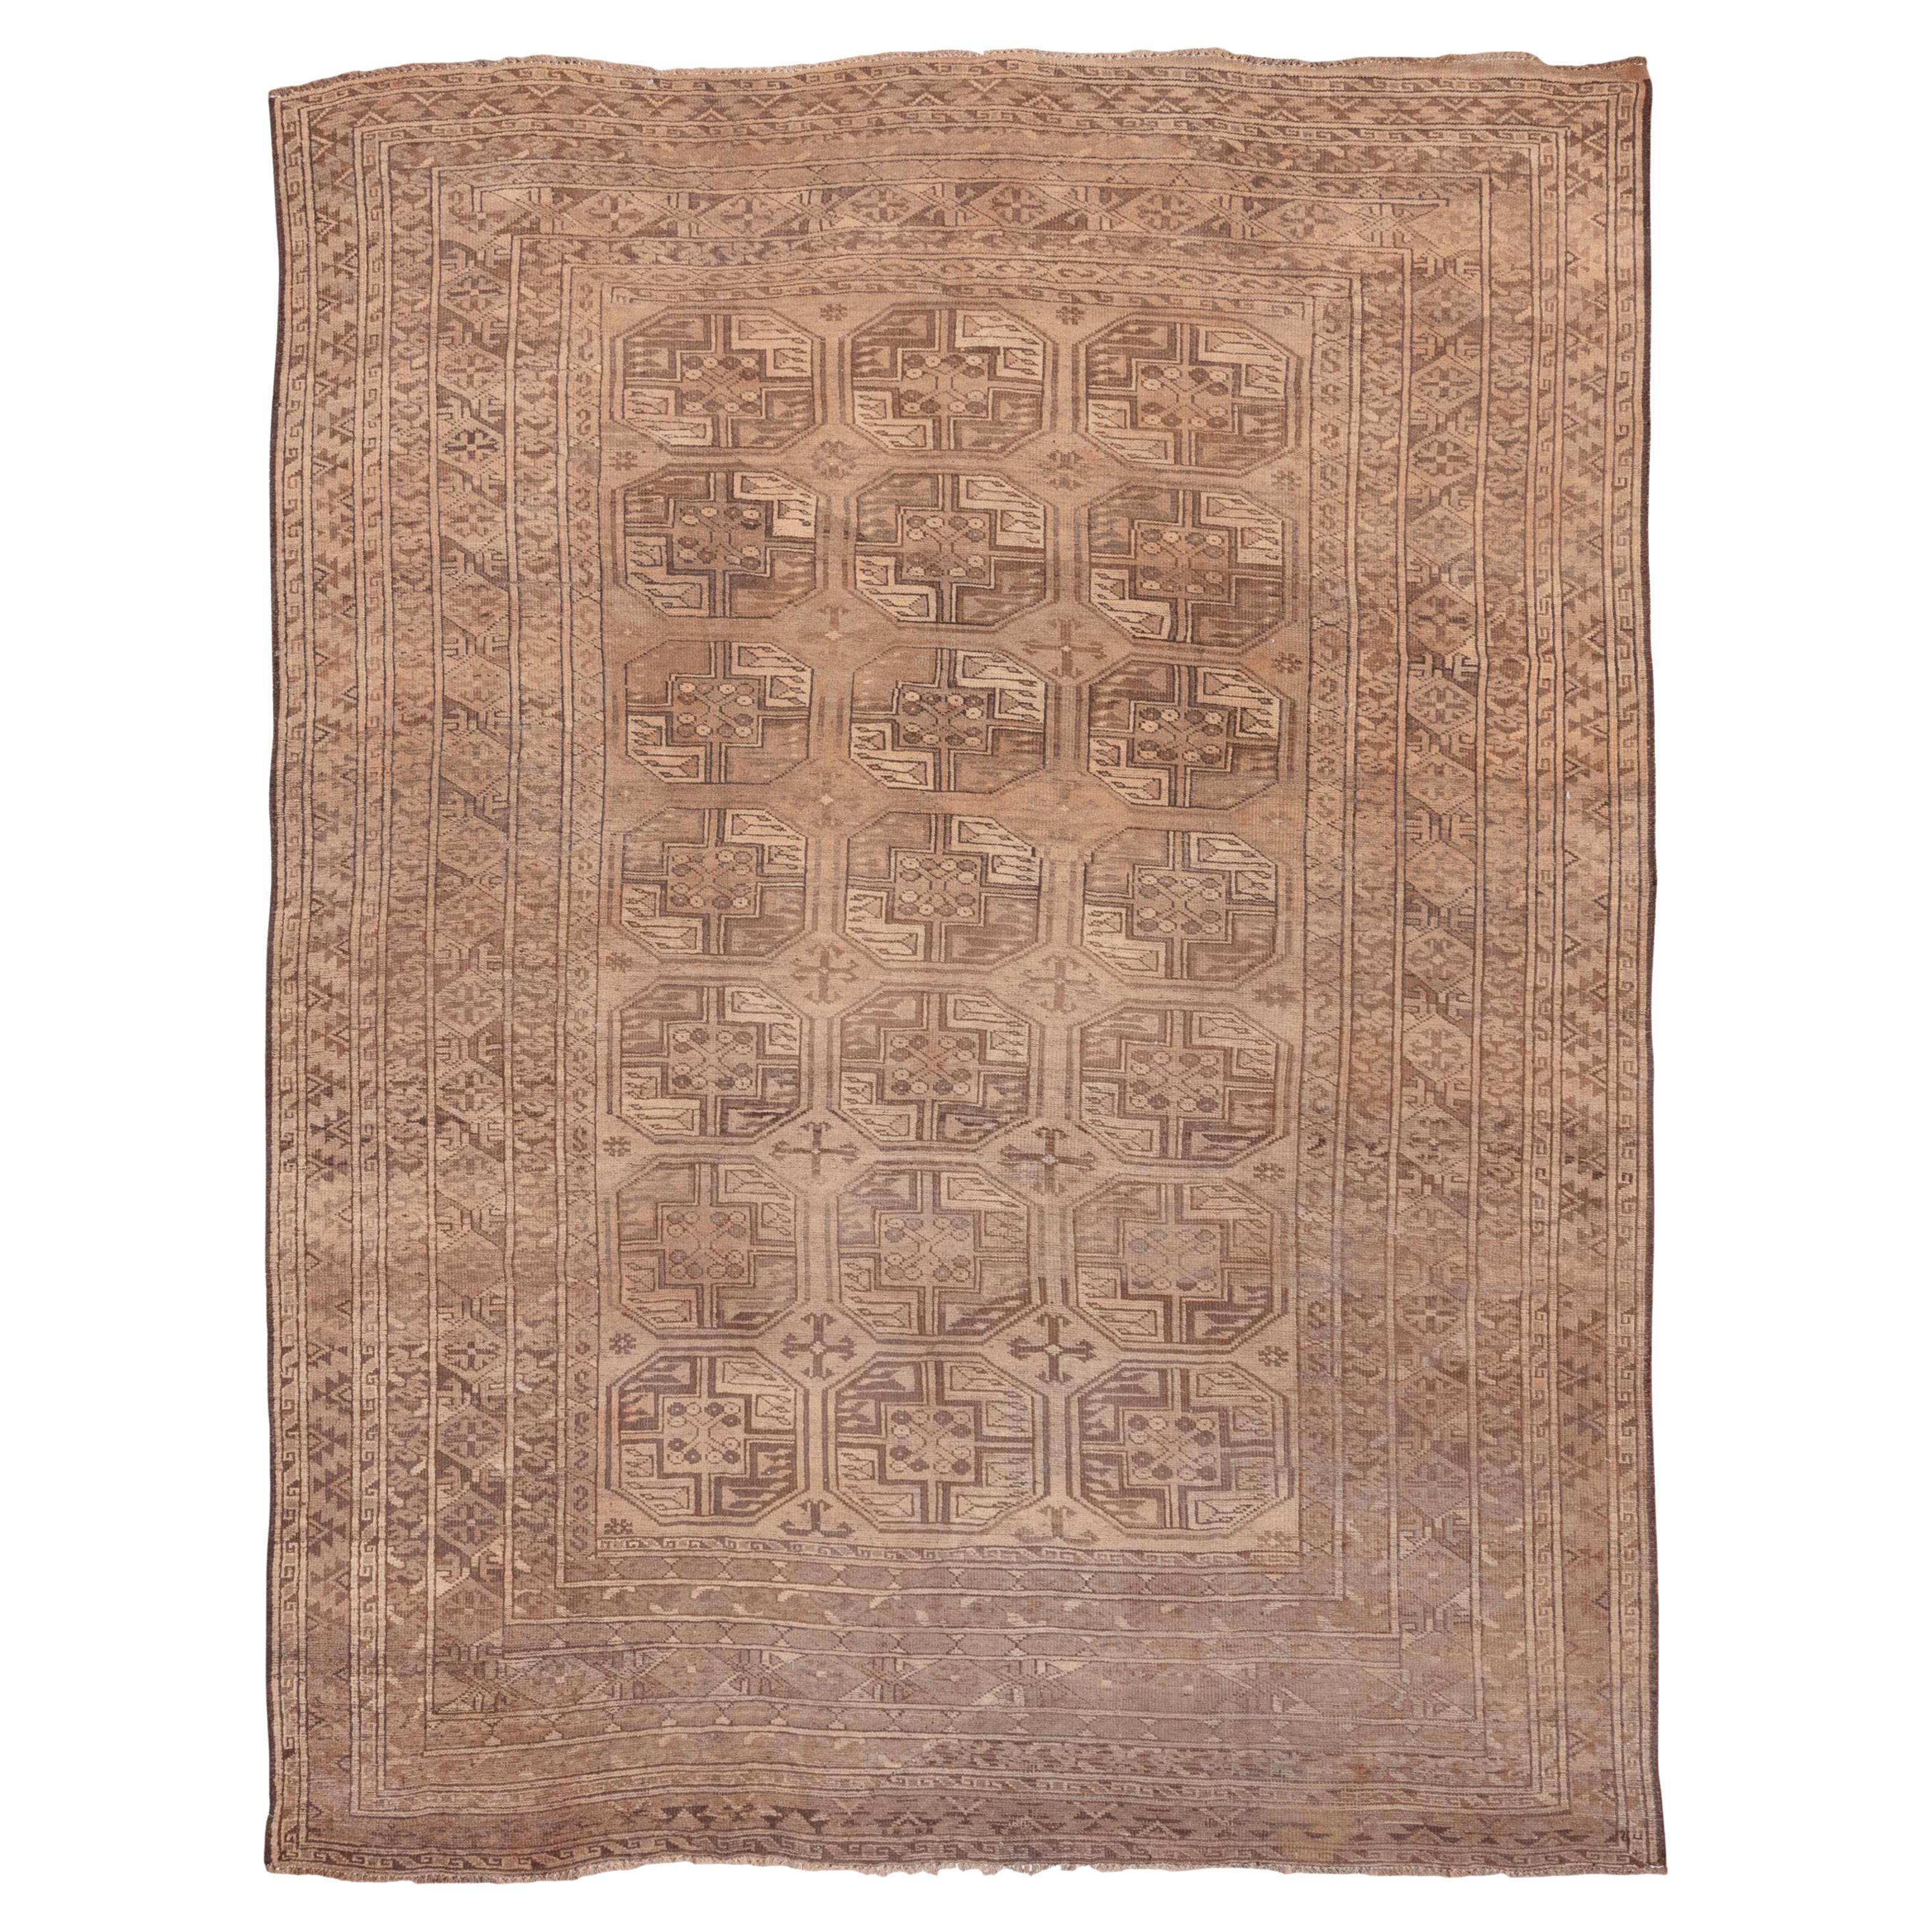 Geometric Gentlemens Turkomen Carpet, Light Brown Field